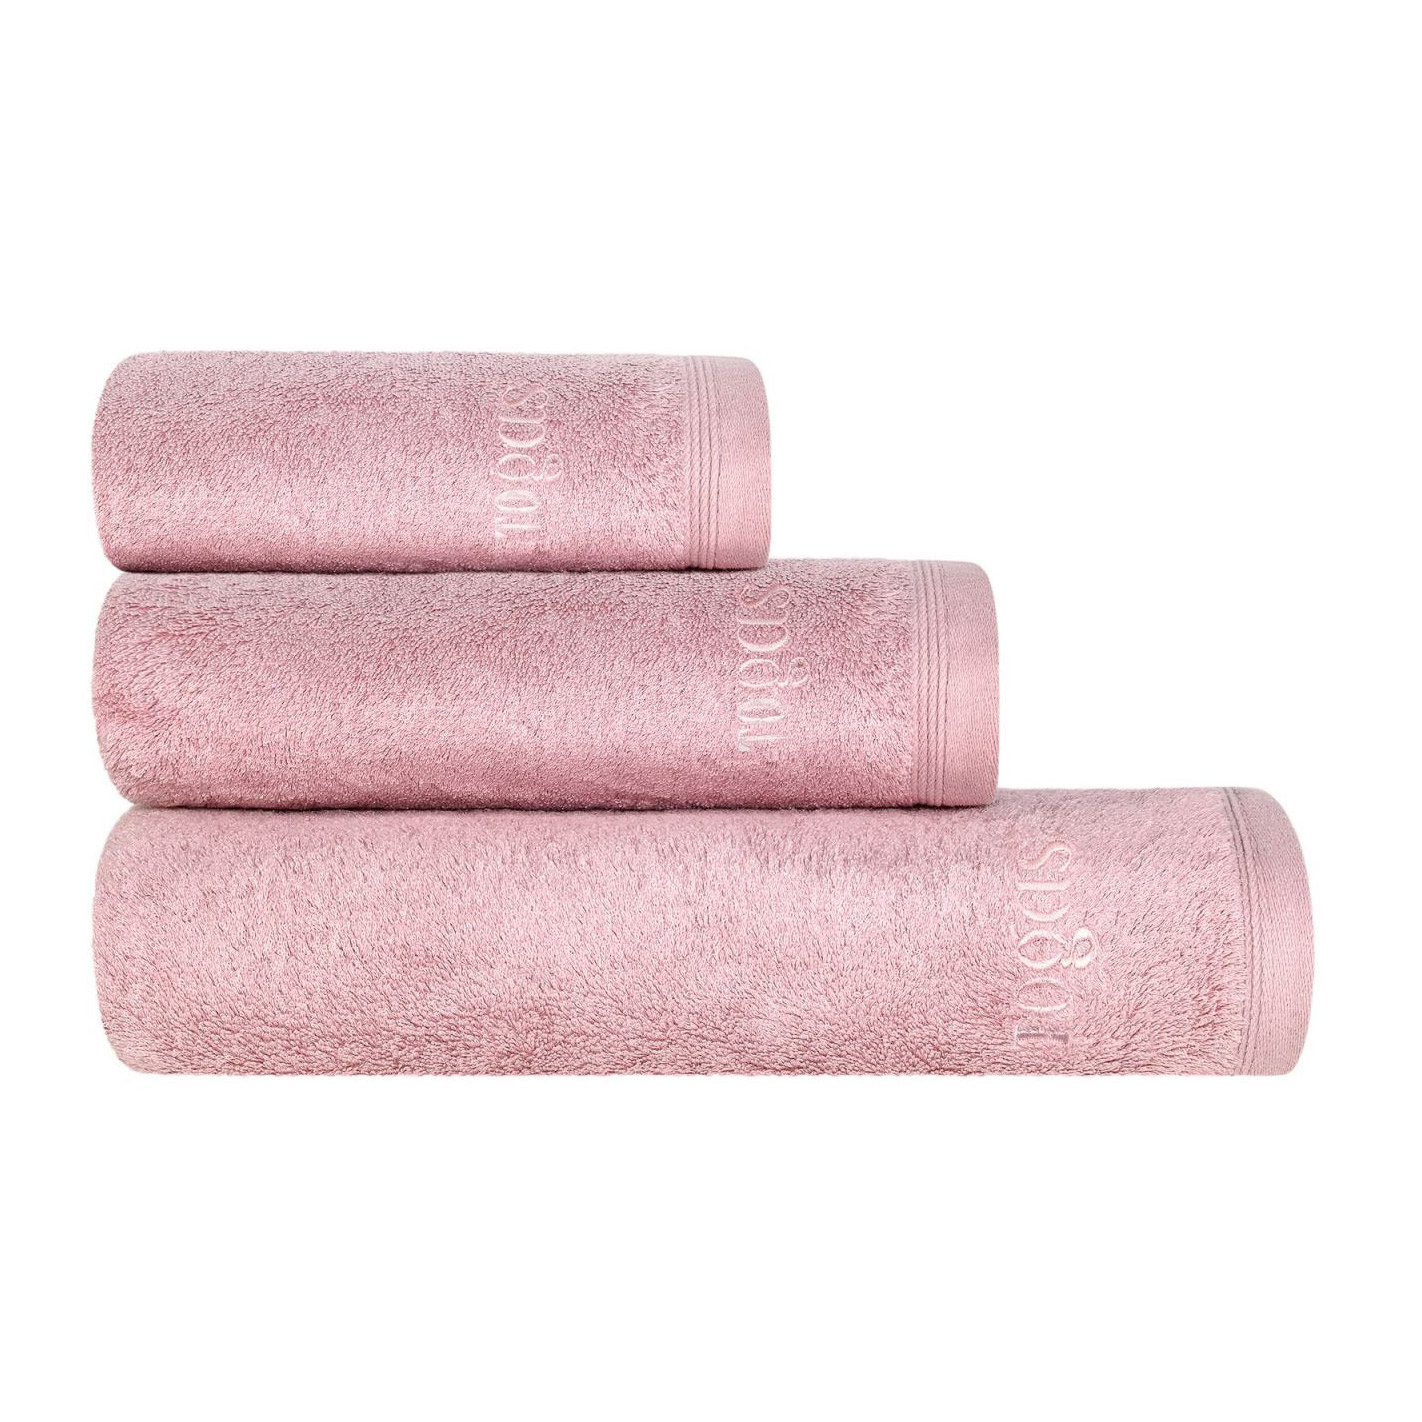 Полотенце Togas Пуатье розовое 50х100 см (10.00.01.1045) полотенце togas джаспер бел серый 50х100